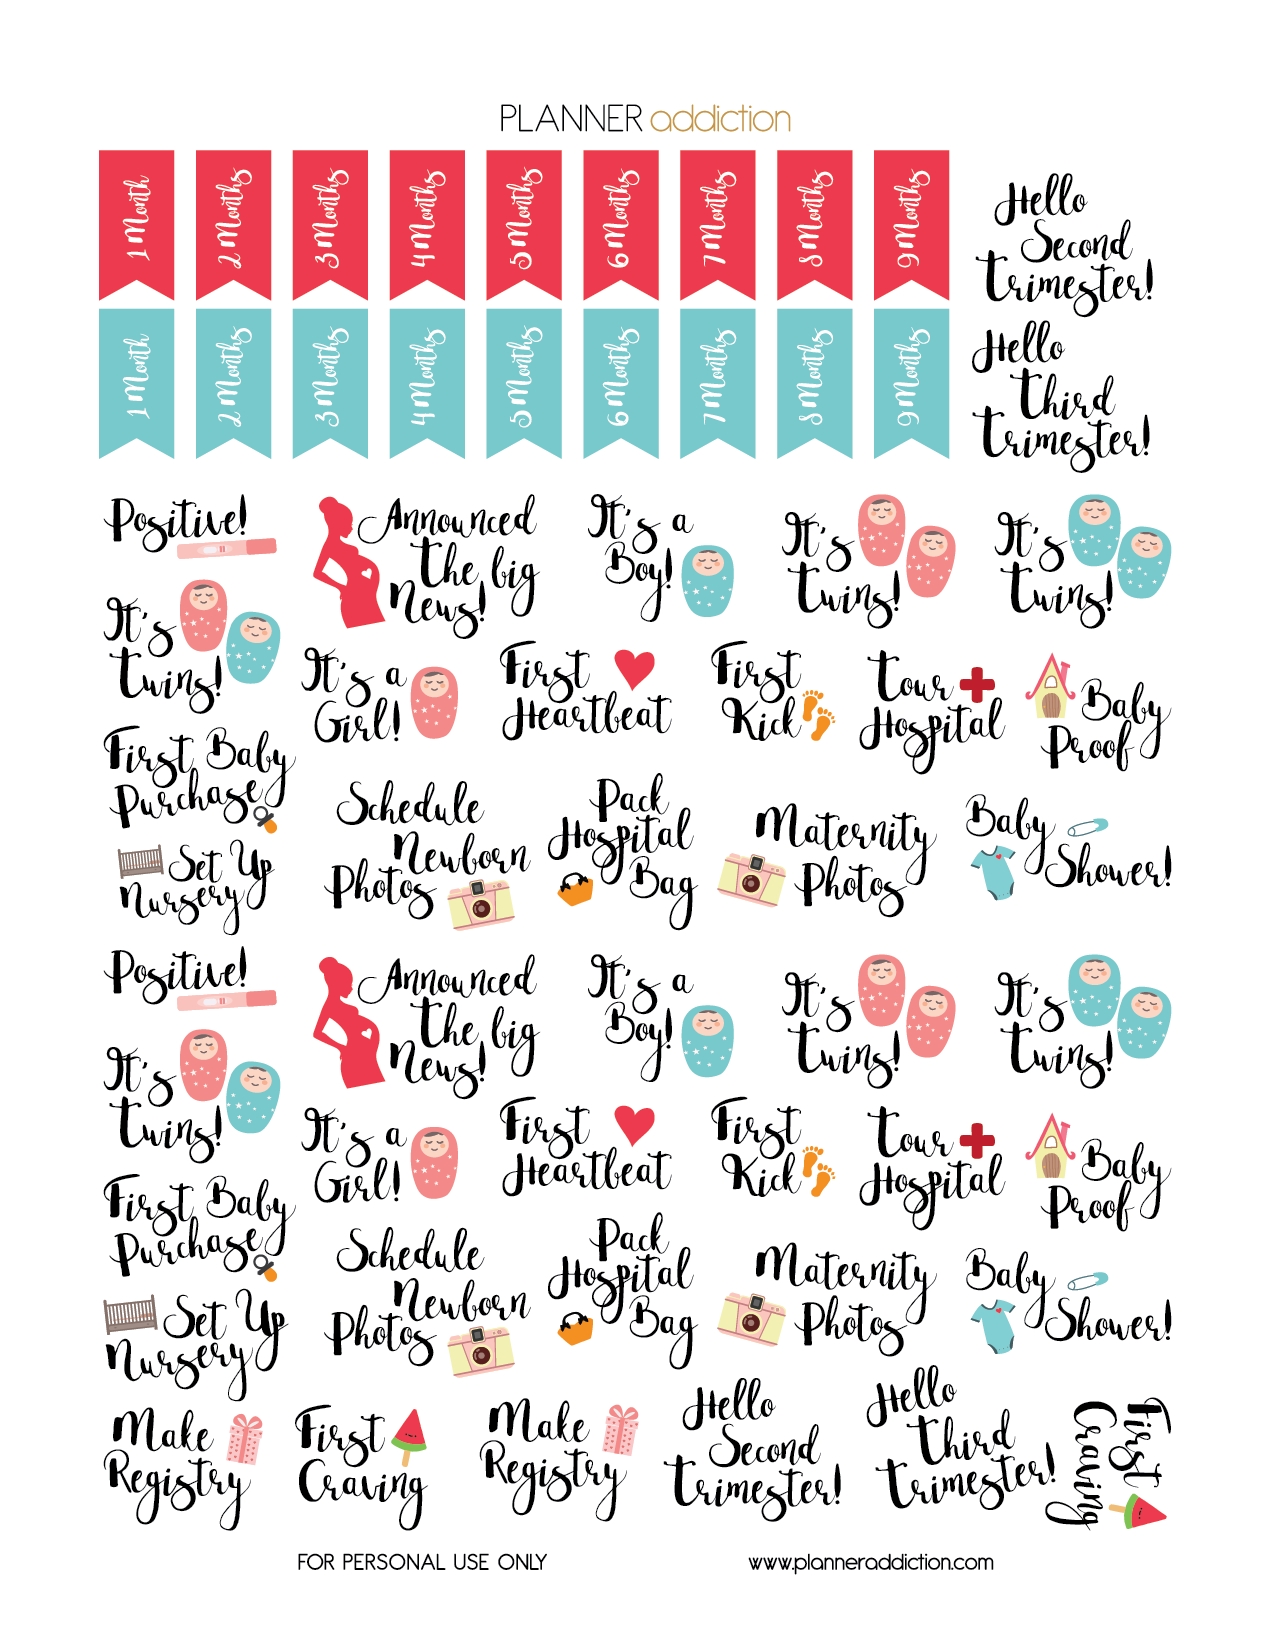 Free Printable Planner Stickers - Pregnancyplanner Addiction  Baby Prediction Plan Calendar Color